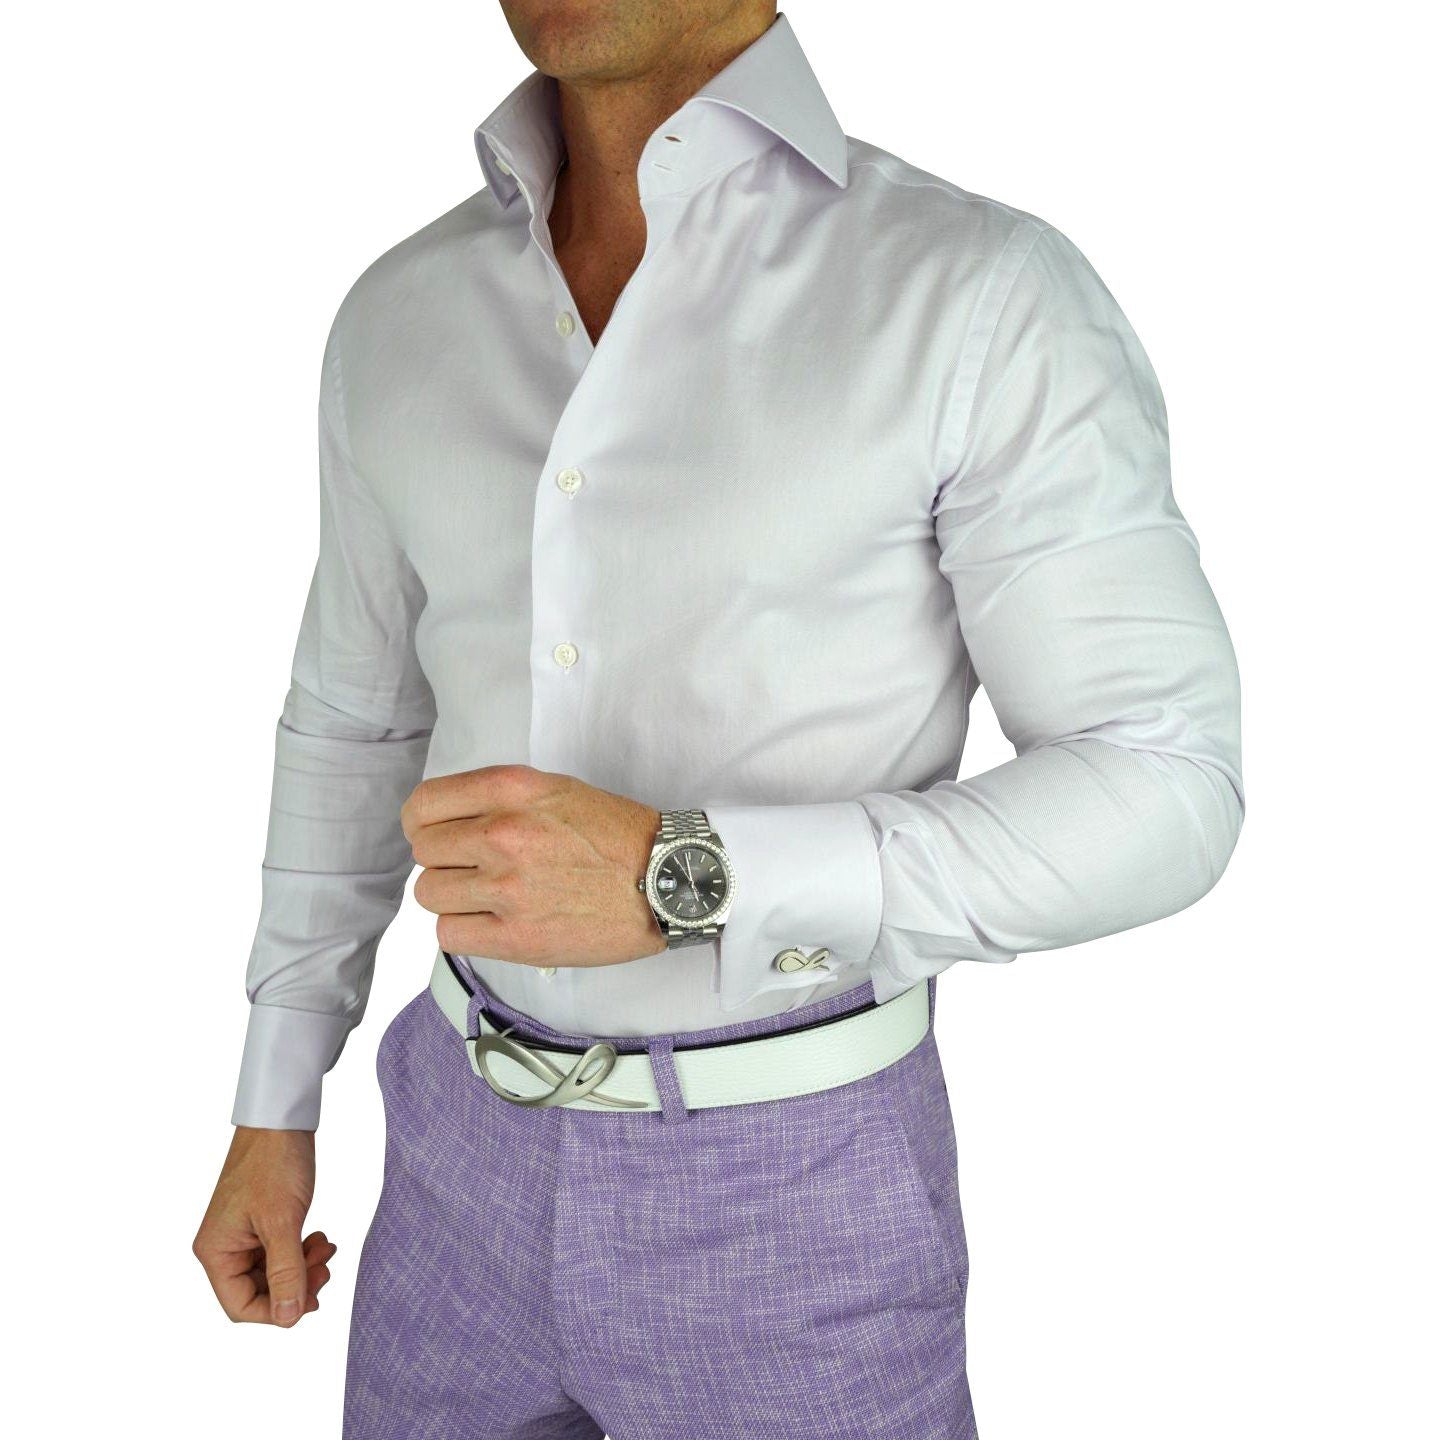 Lavender Oxford Dress Shirt